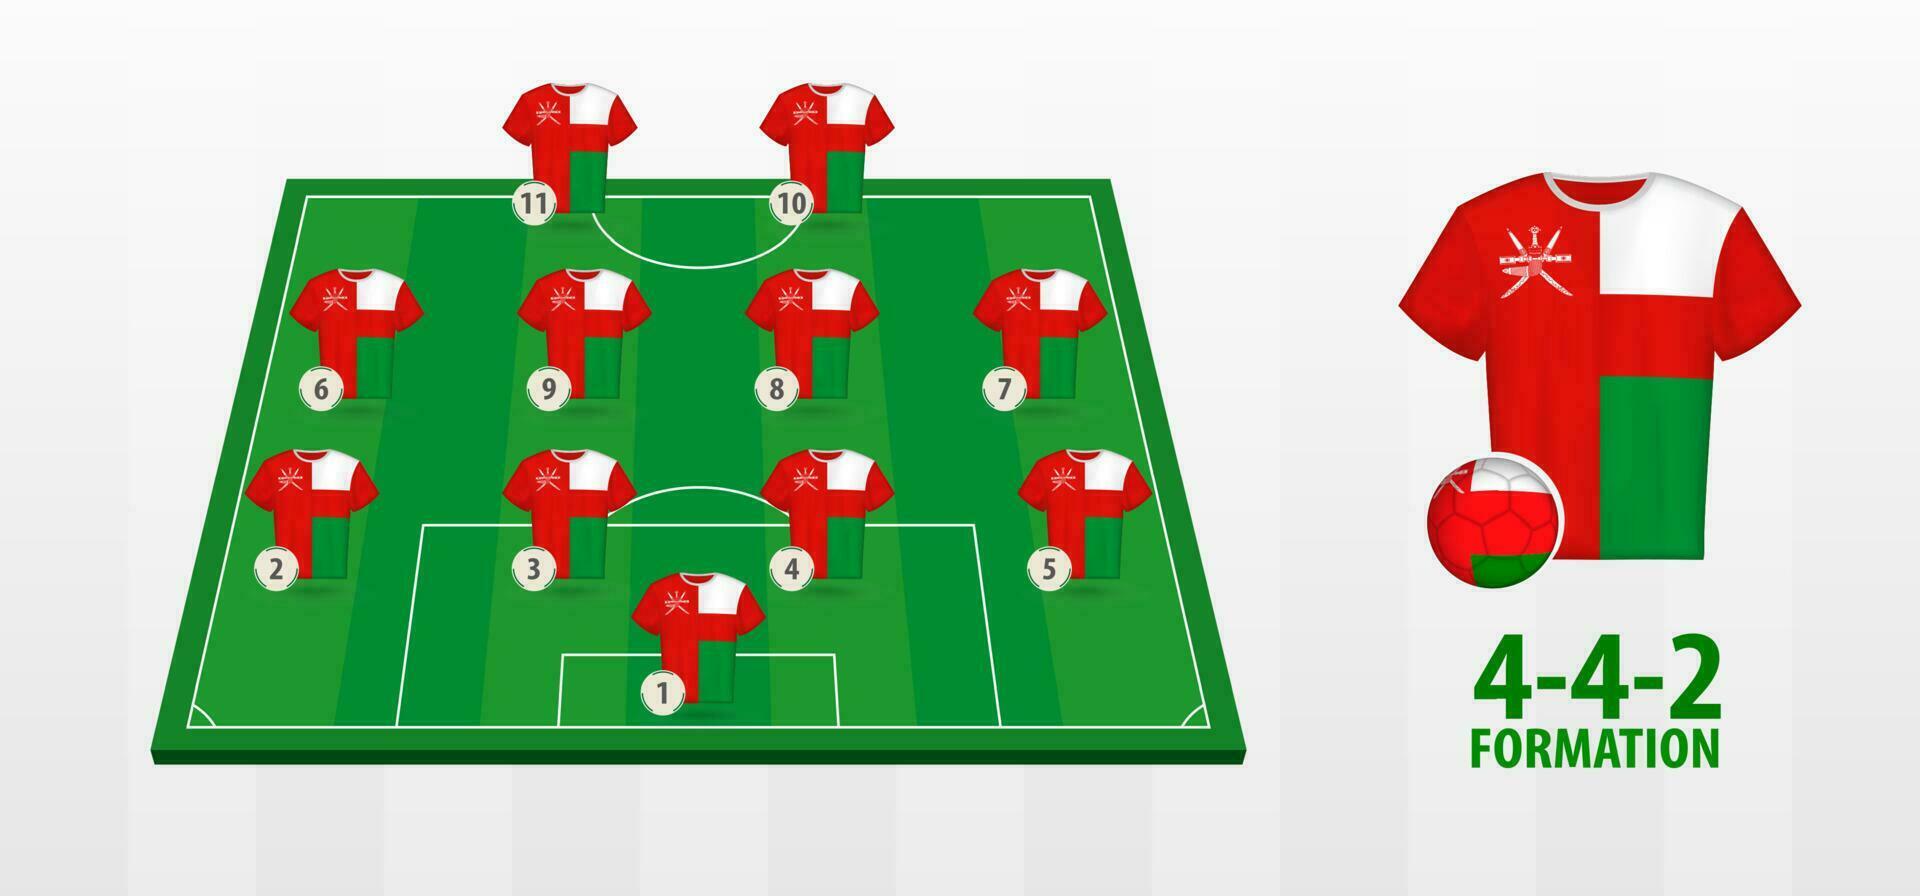 Oman National Football Team Formation on Football Field. vector